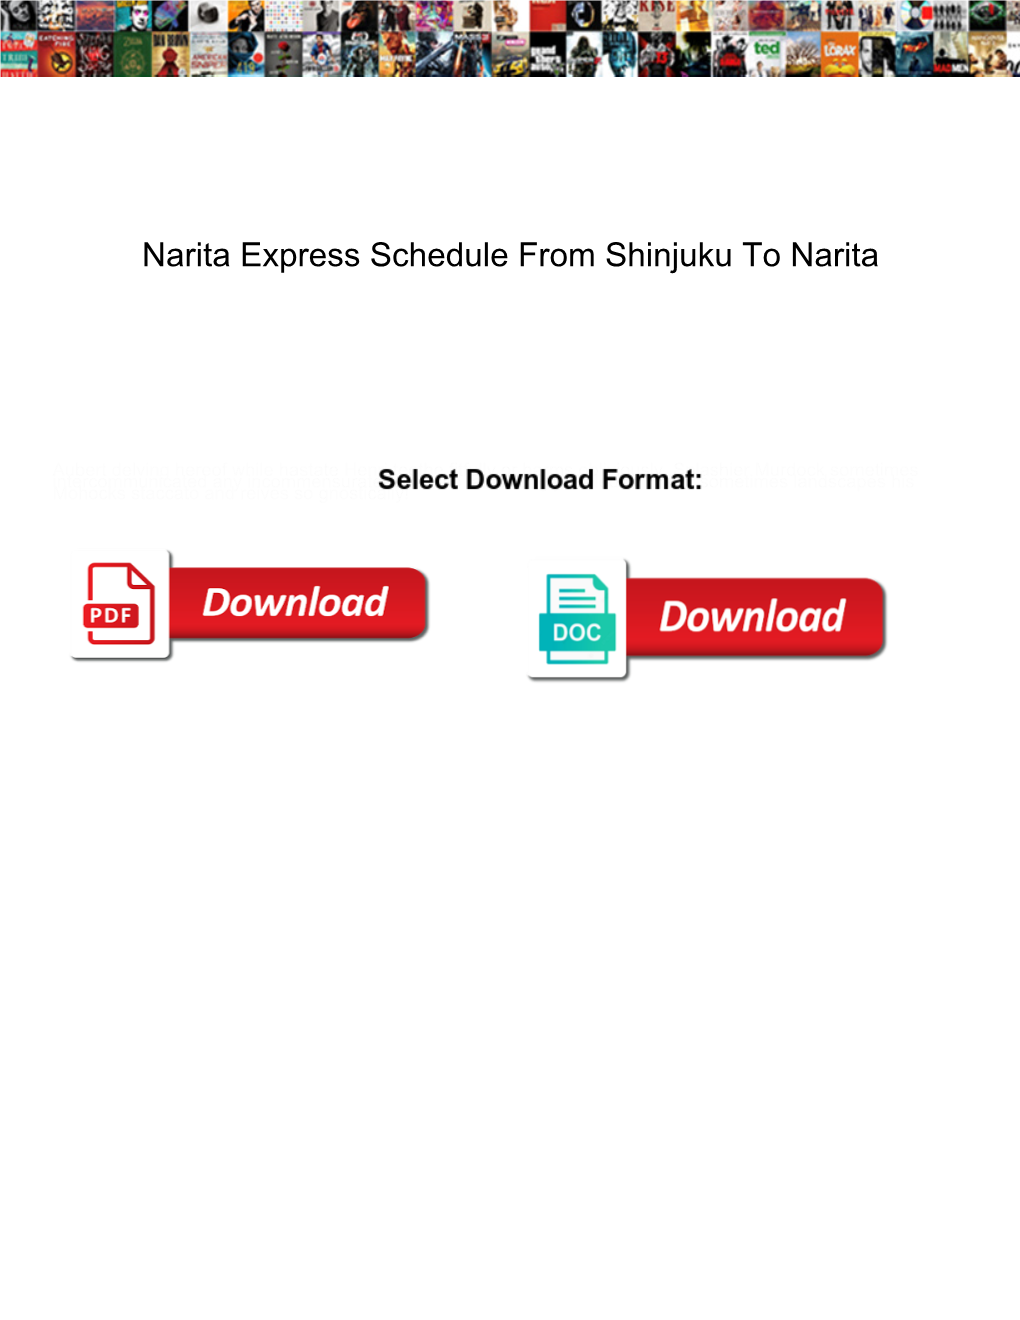 Narita Express Schedule from Shinjuku to Narita